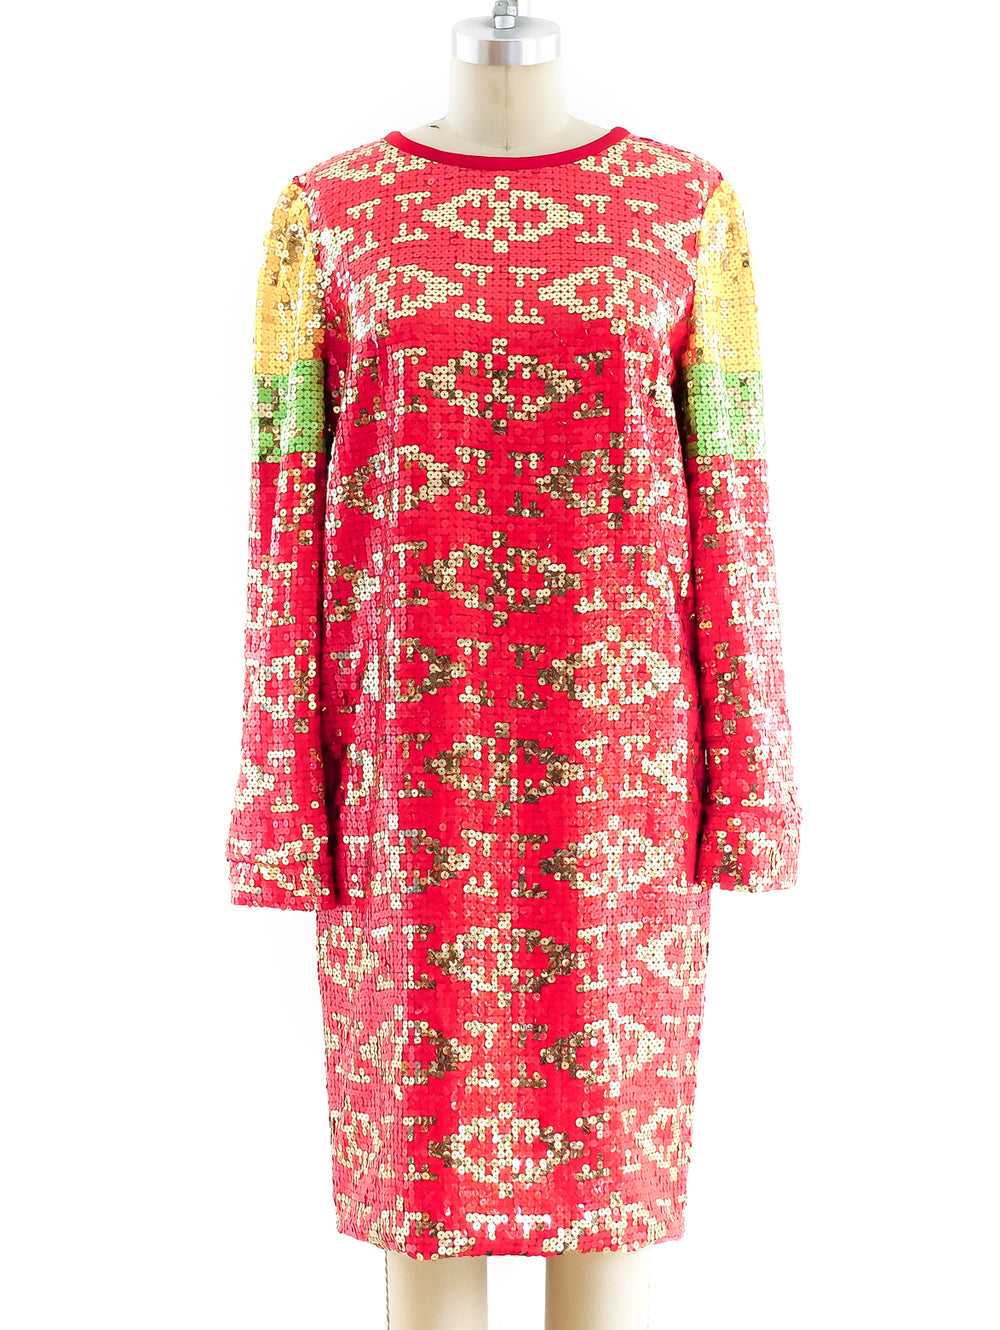 Multicolor Sequin Dress - image 1